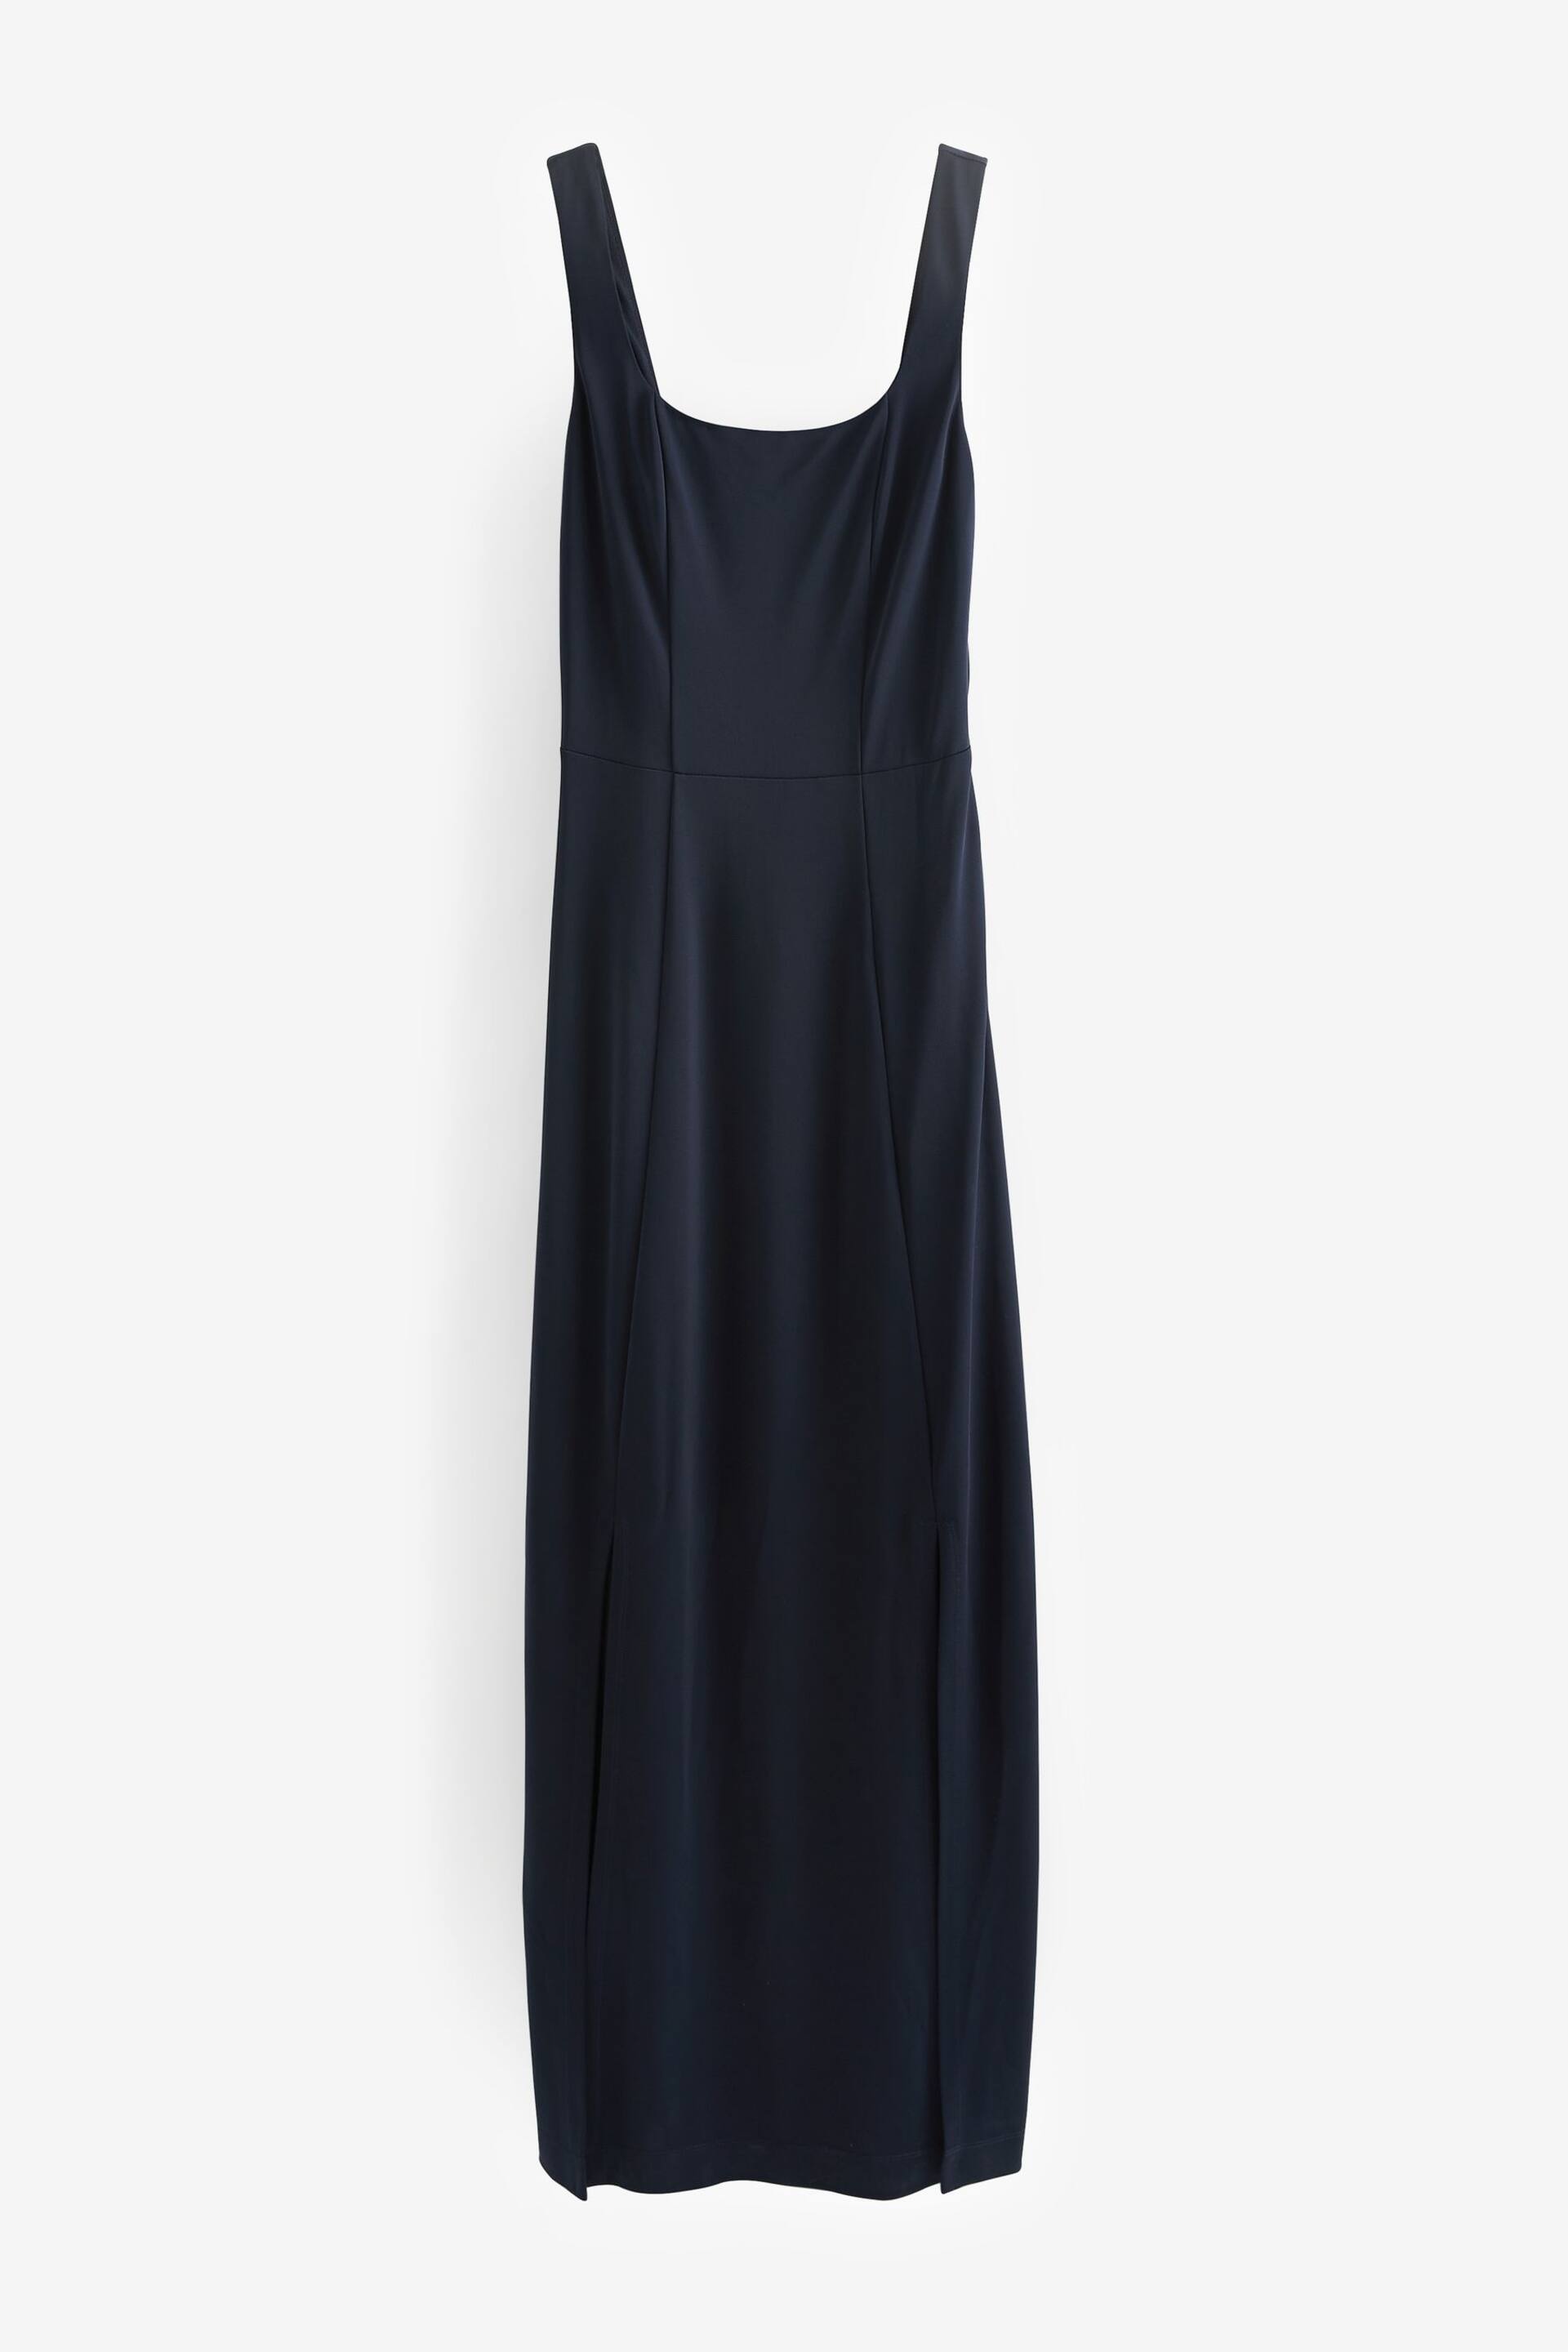 Navy Blue Square Neck Bridesmaid Maxi Dress - Image 6 of 7